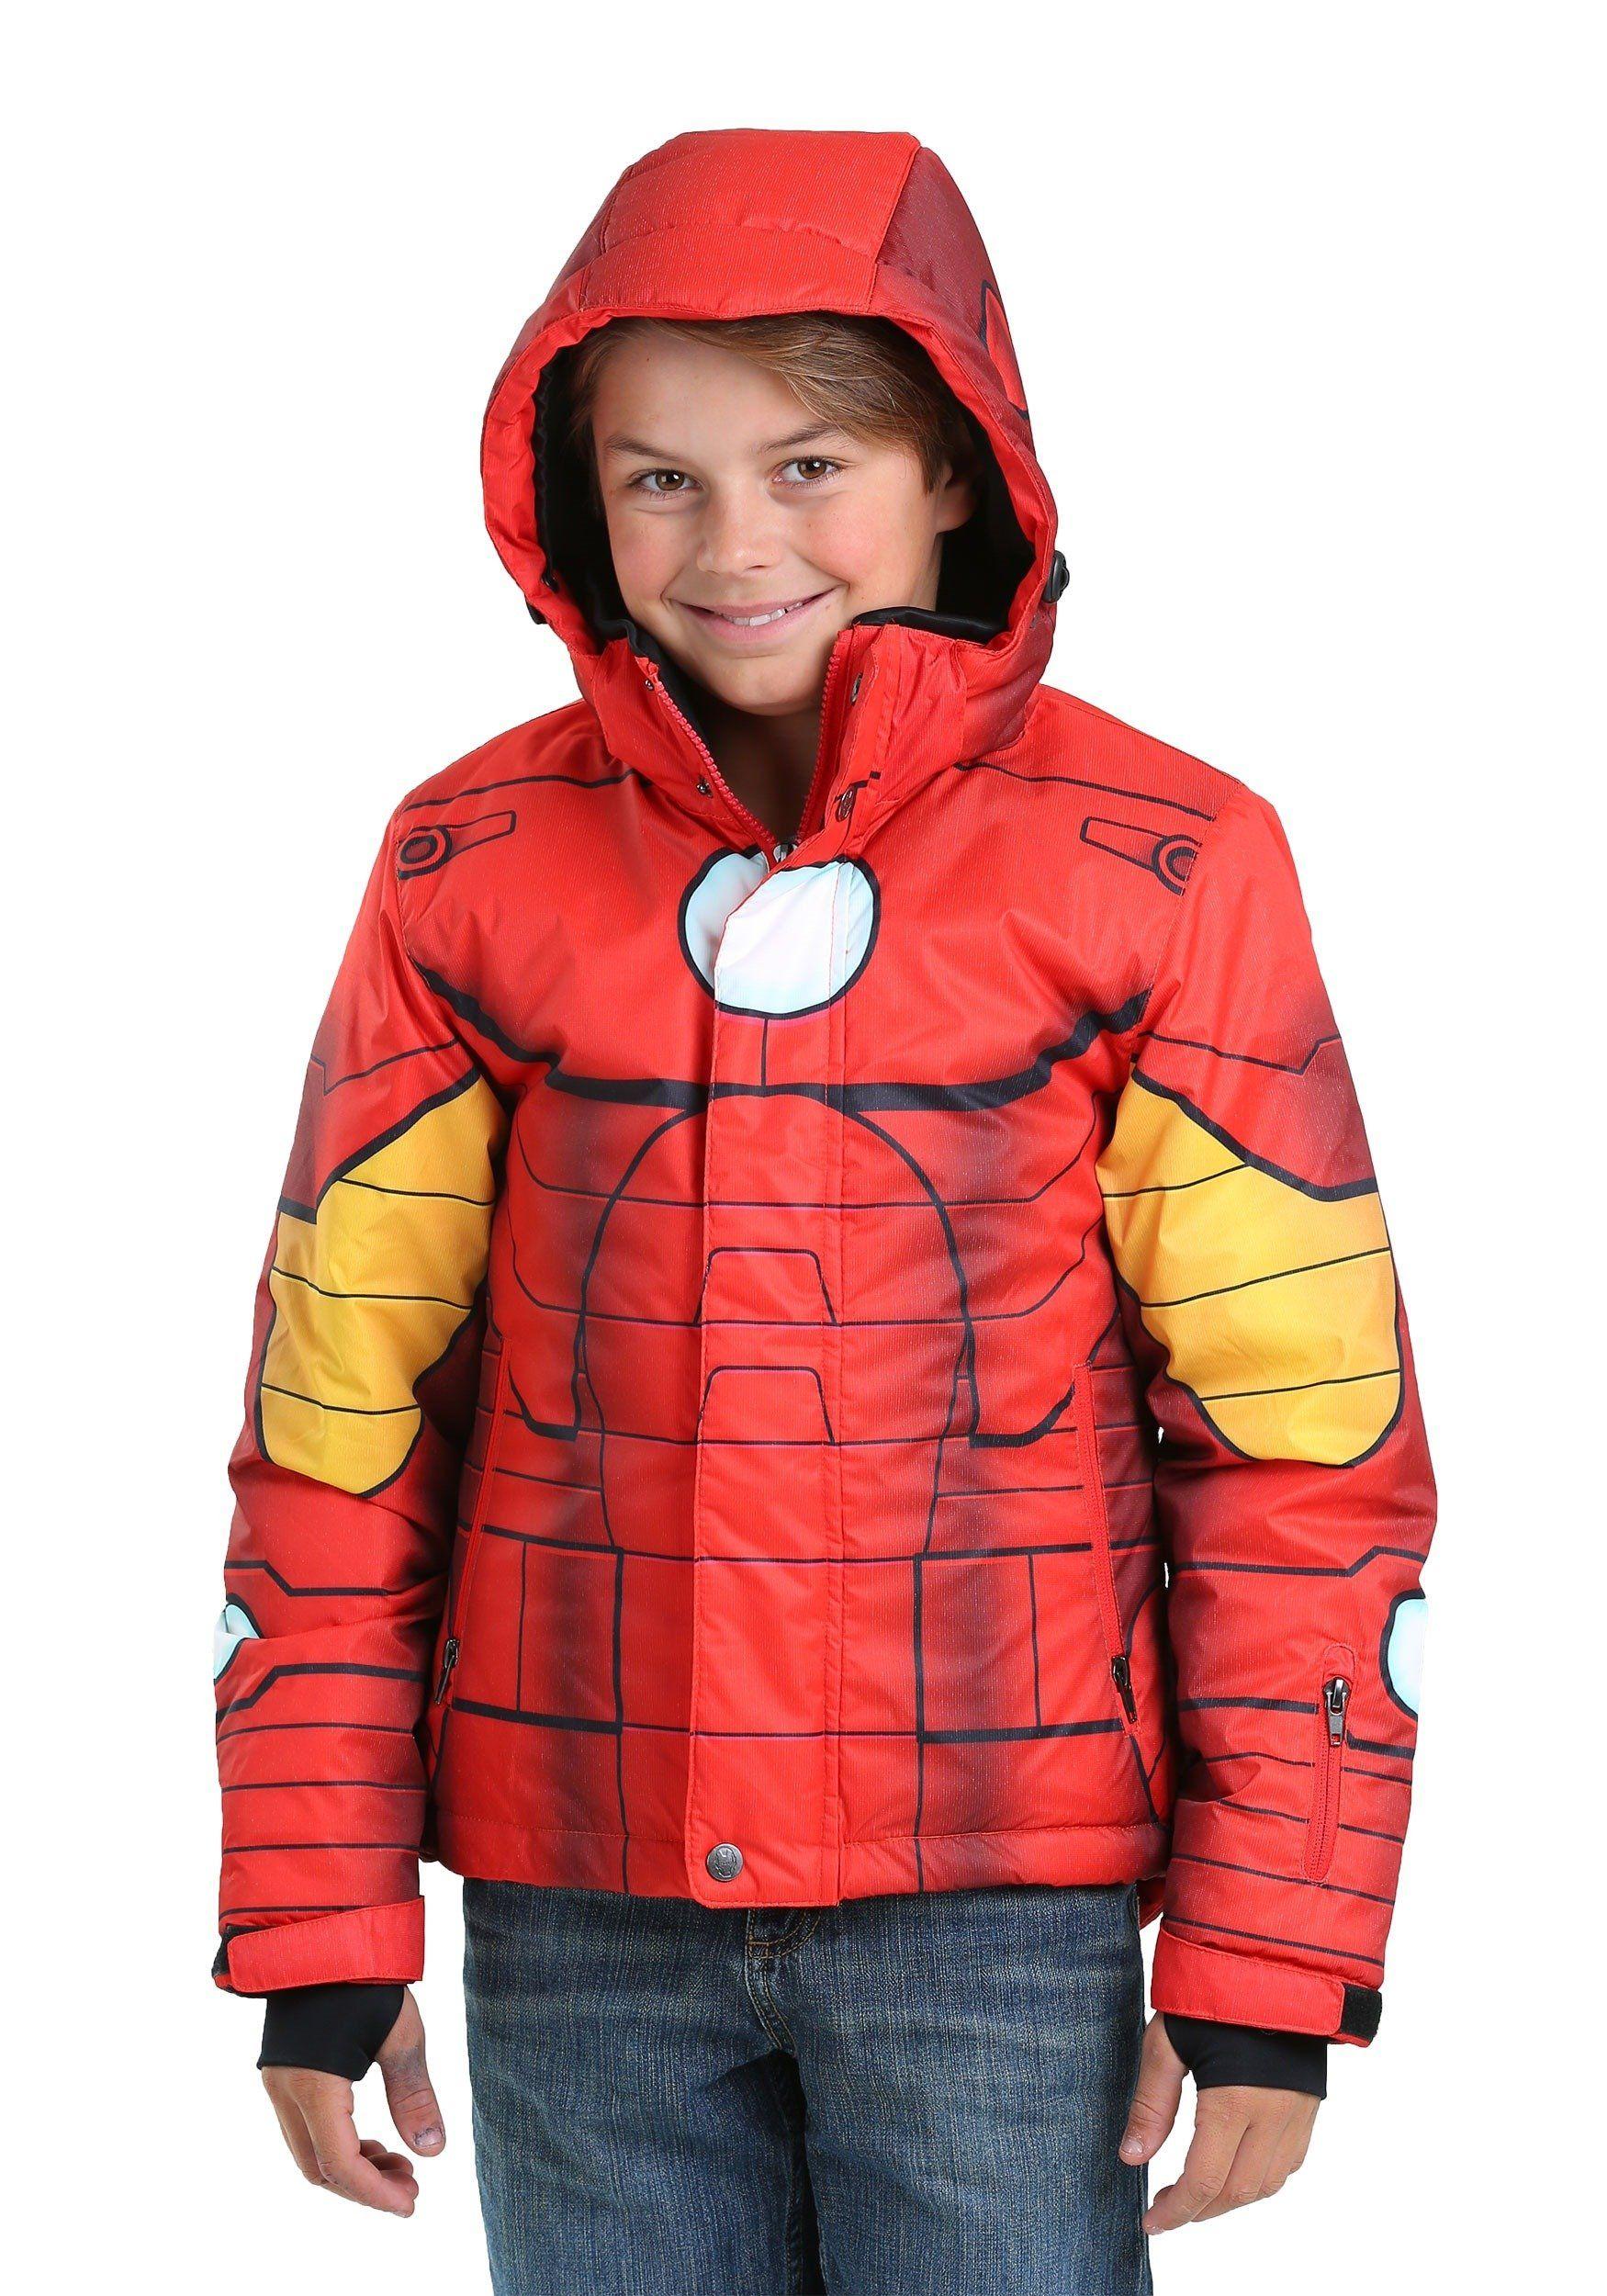 Man in Red Jacket Logo - Amazon.com: Kids Iron Man Snow Jacket Red, Gold: Clothing